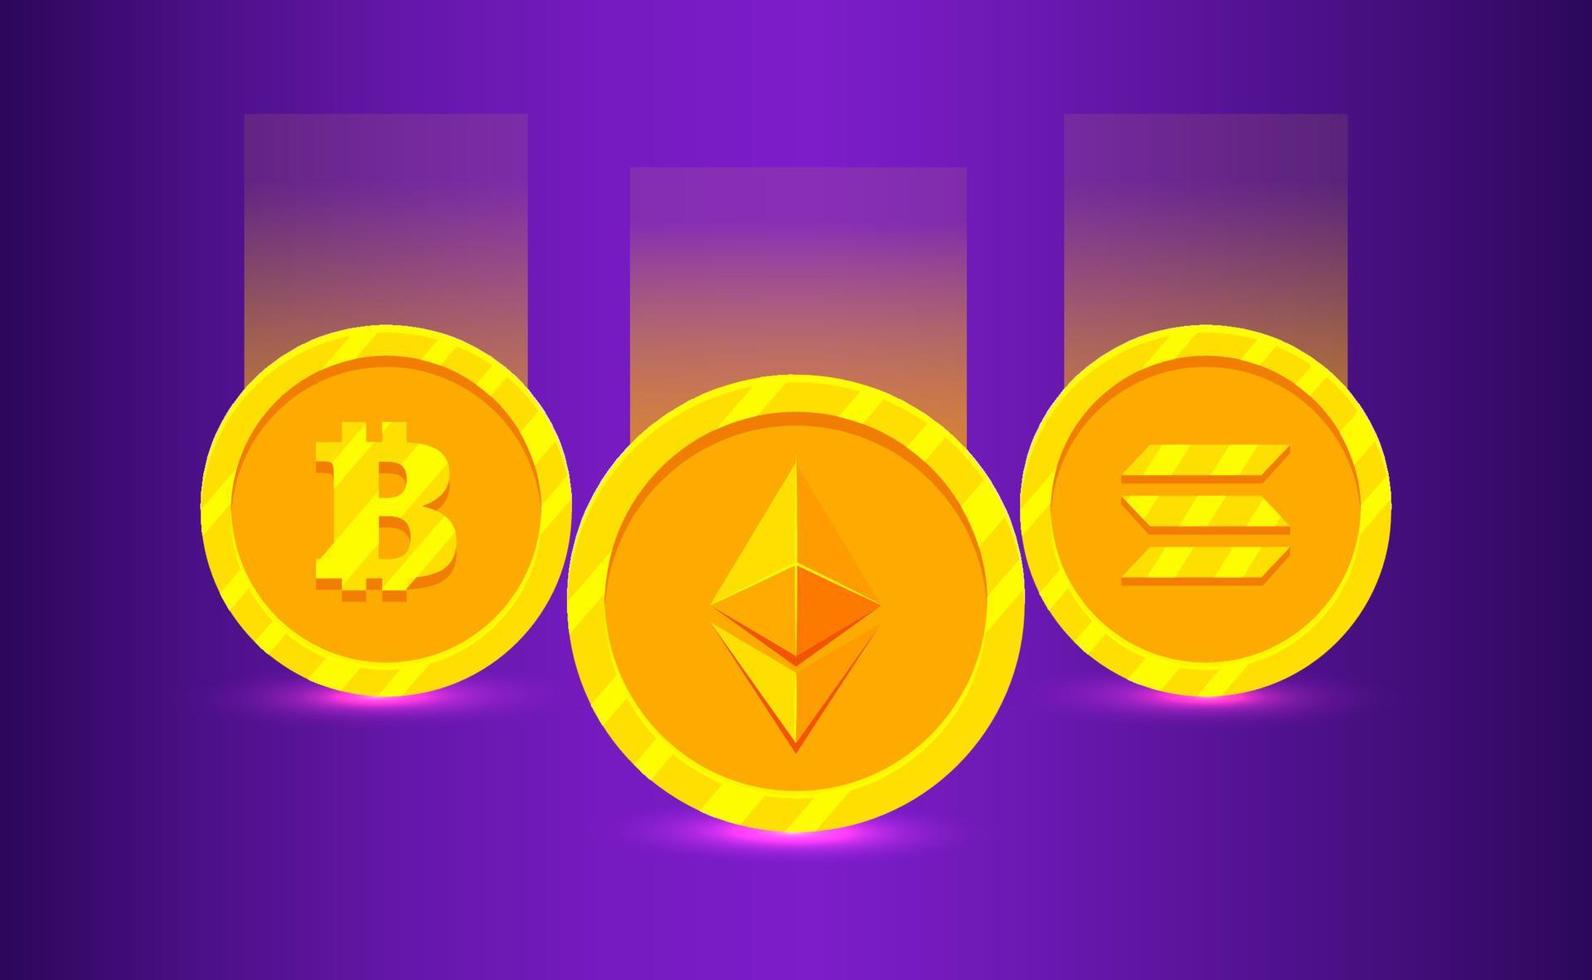 bitcoins dourados de criptomoeda voadora. design plano de conceito de moedas digitais vetor